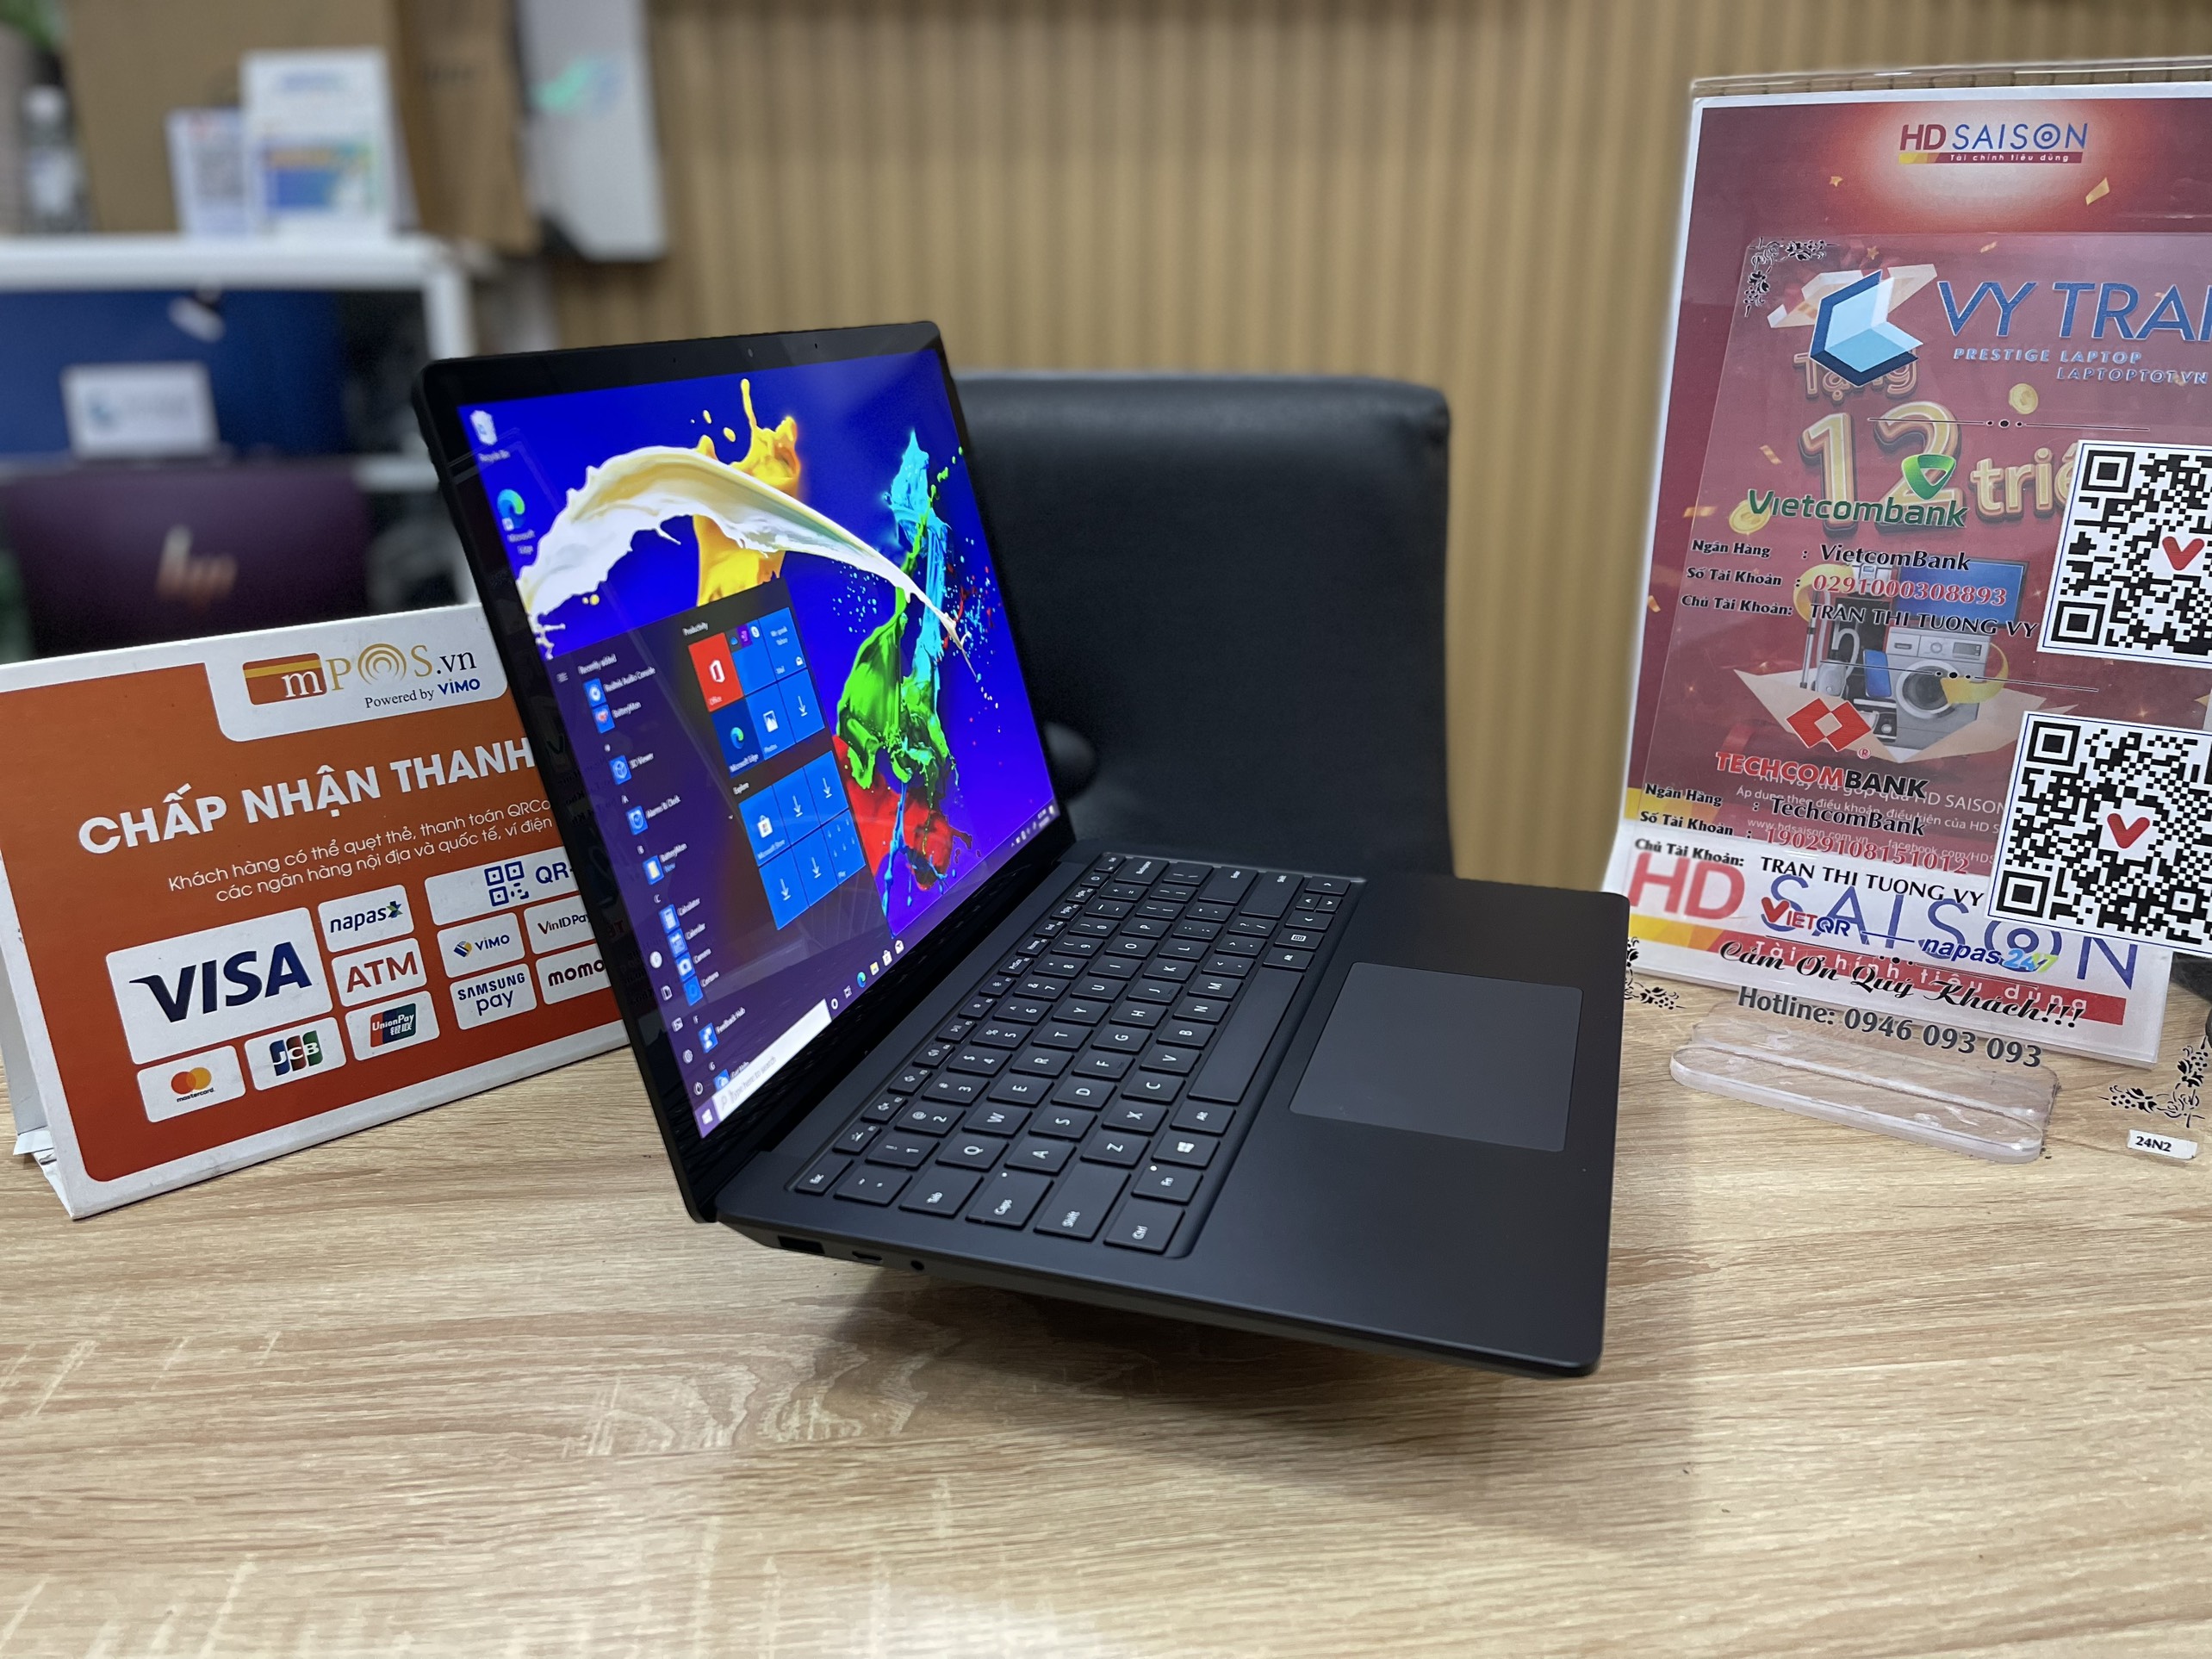 Microsoft Surface Laptop 3 Core i7